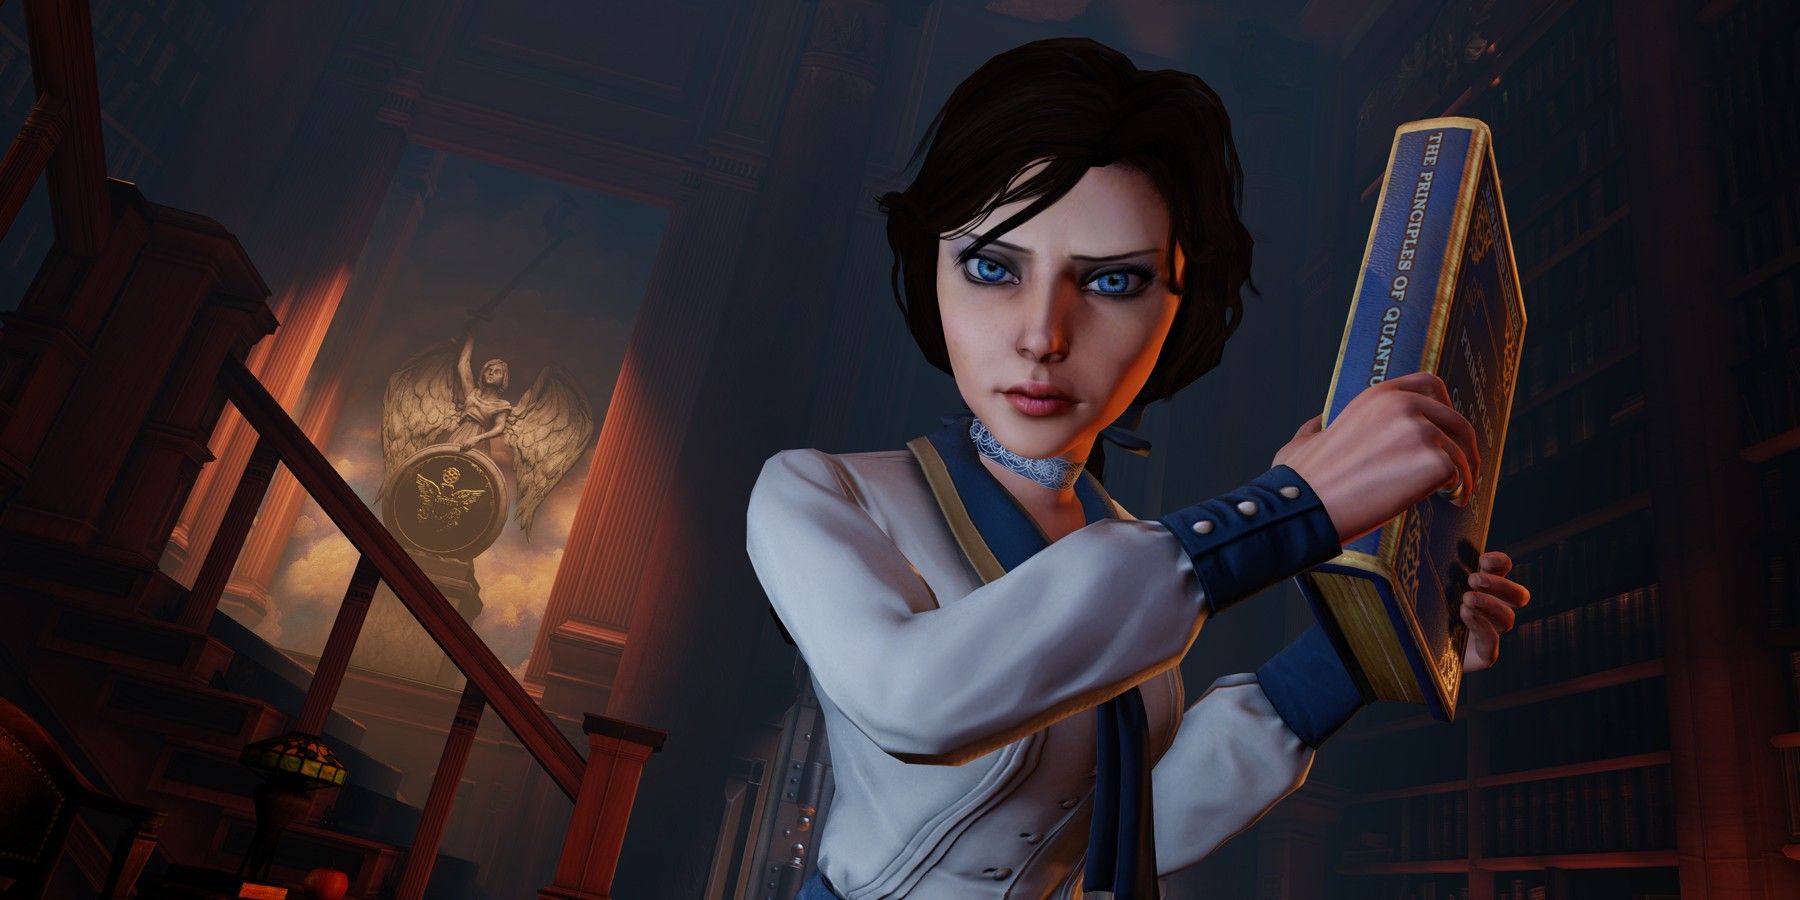 Elizabeth in BioShock Infinite